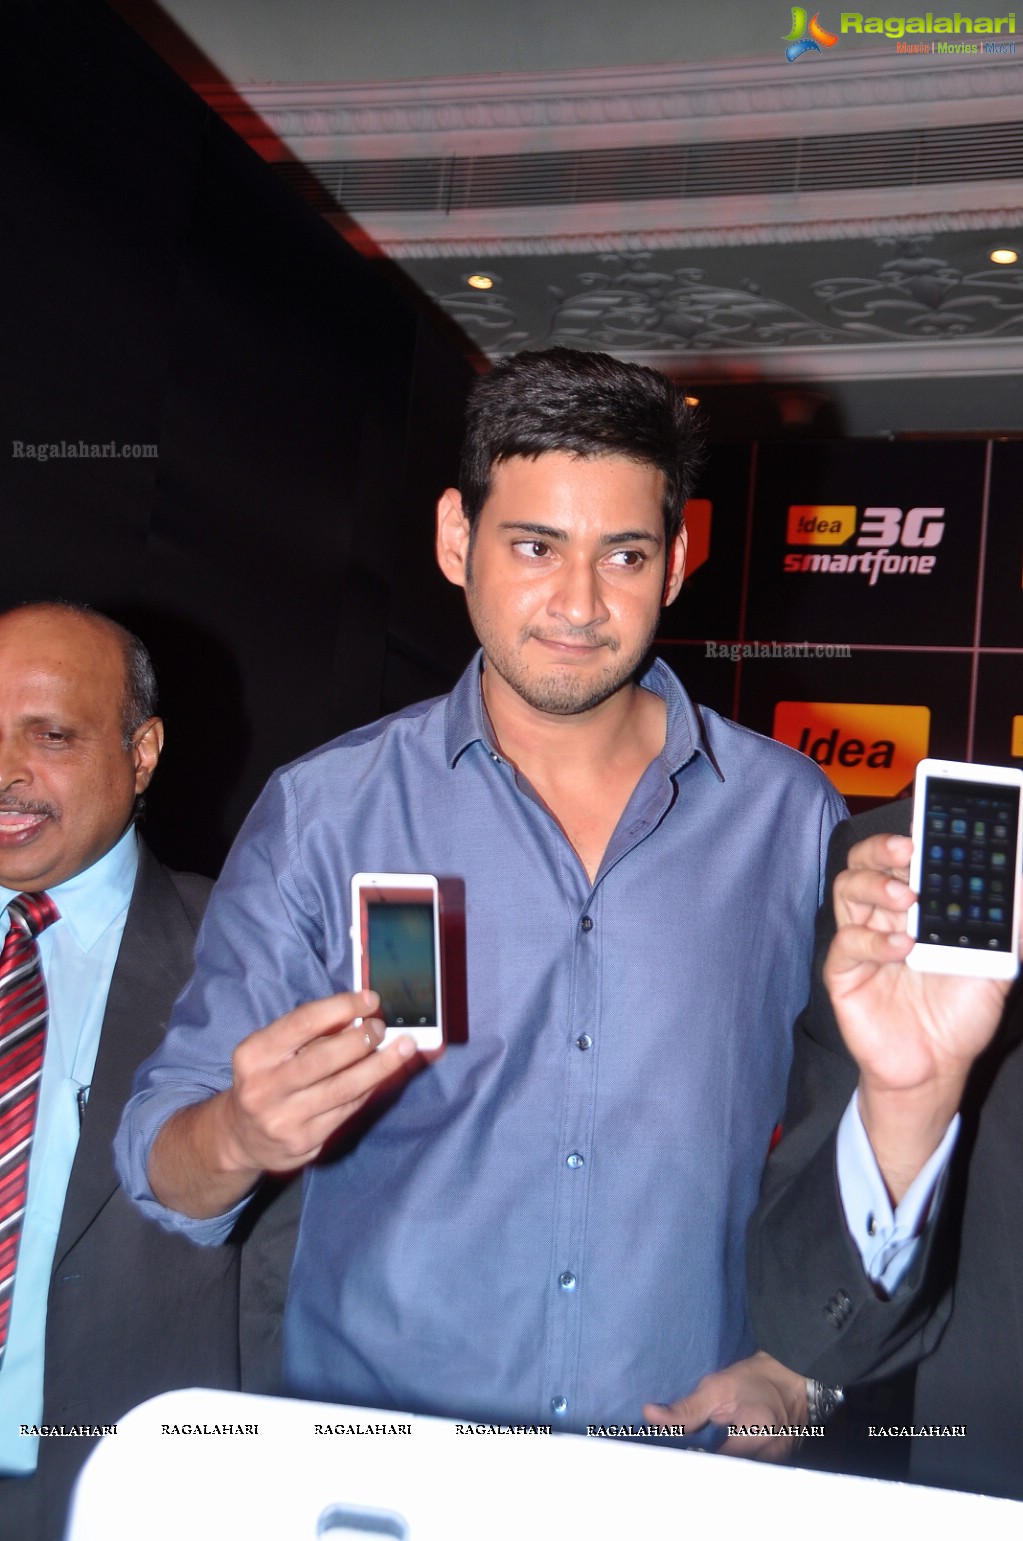 Superstar Mahesh Babu unveils Idea Ivory Smartphone in Hyderabad